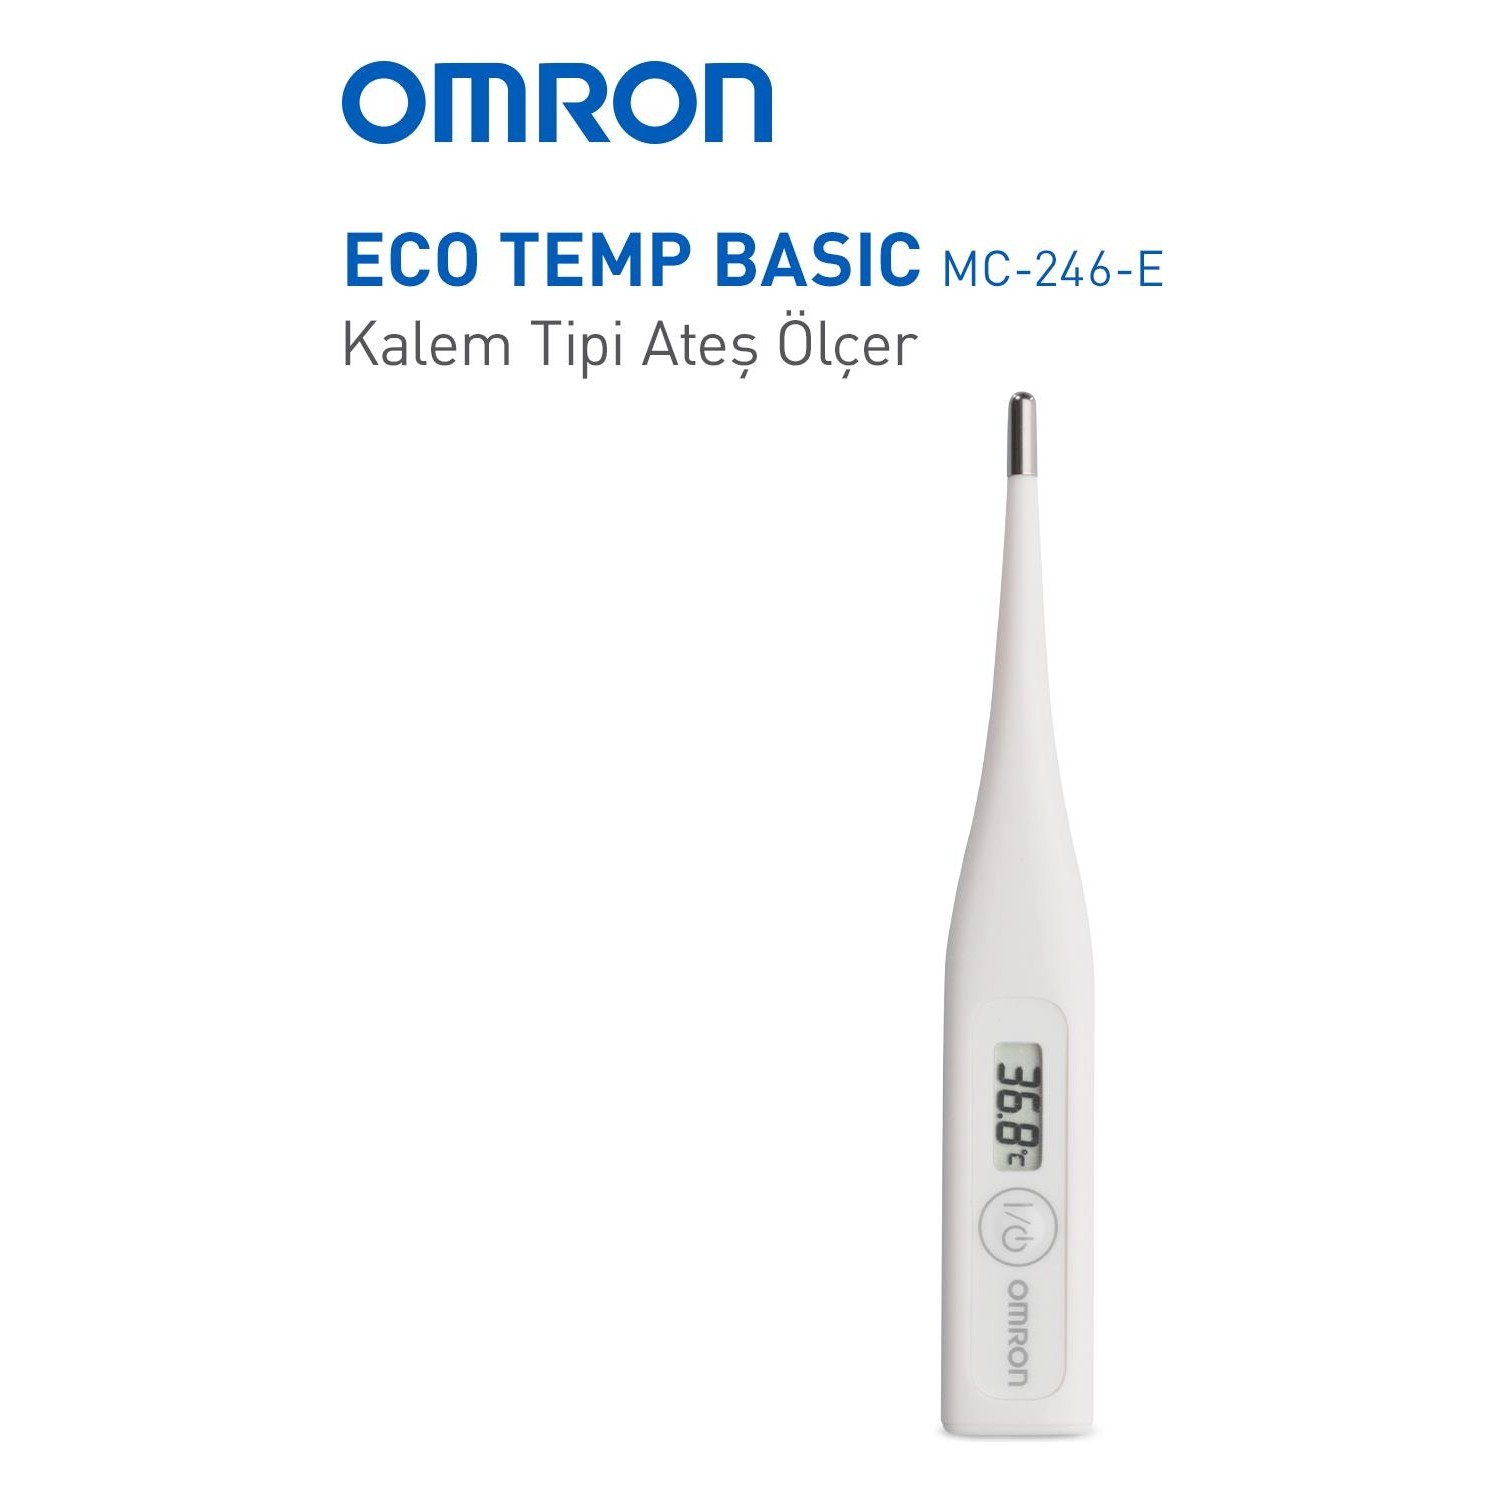 Omron eco temp basic. Медицинский цифровой термометр Omron MC-246 схема. Медицинский цифровой термометр Omron MC-246 схема электрическая.